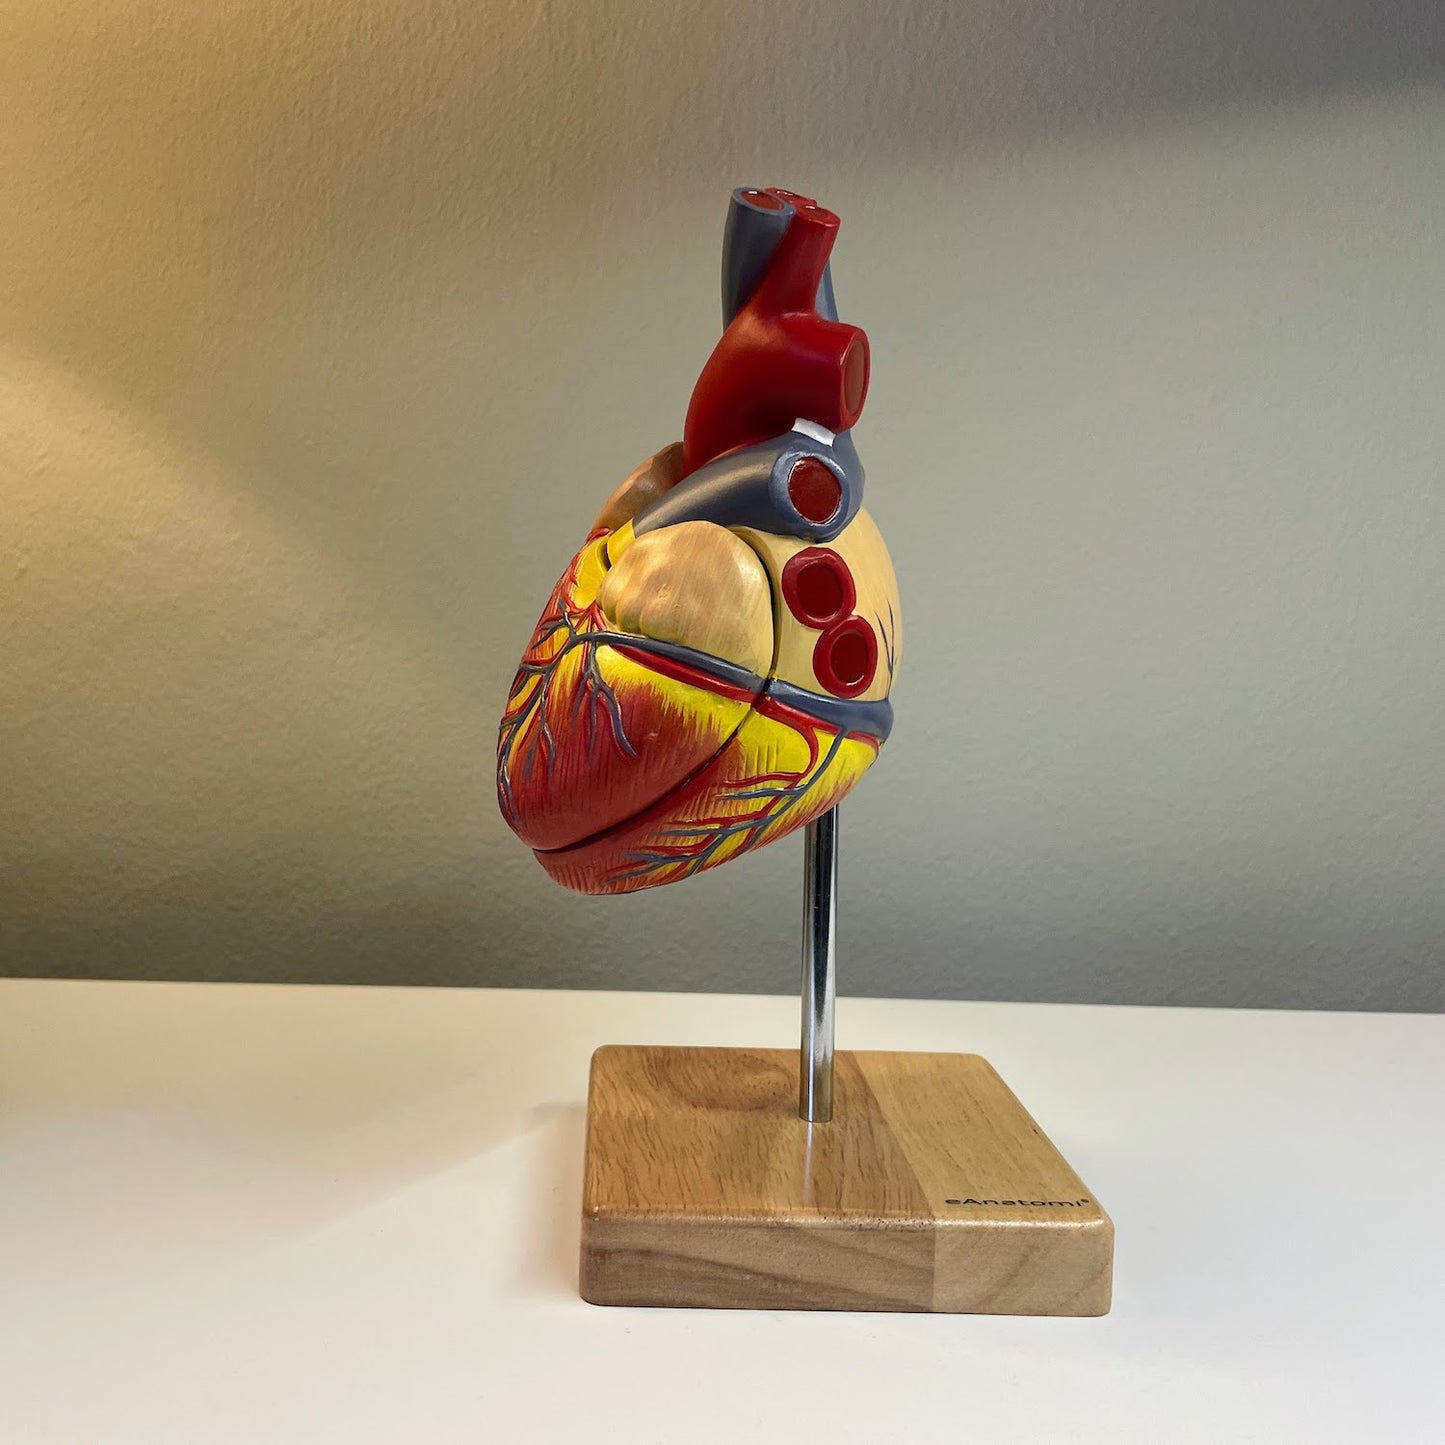 Klassisk hjärtmodell i realistisk storlek